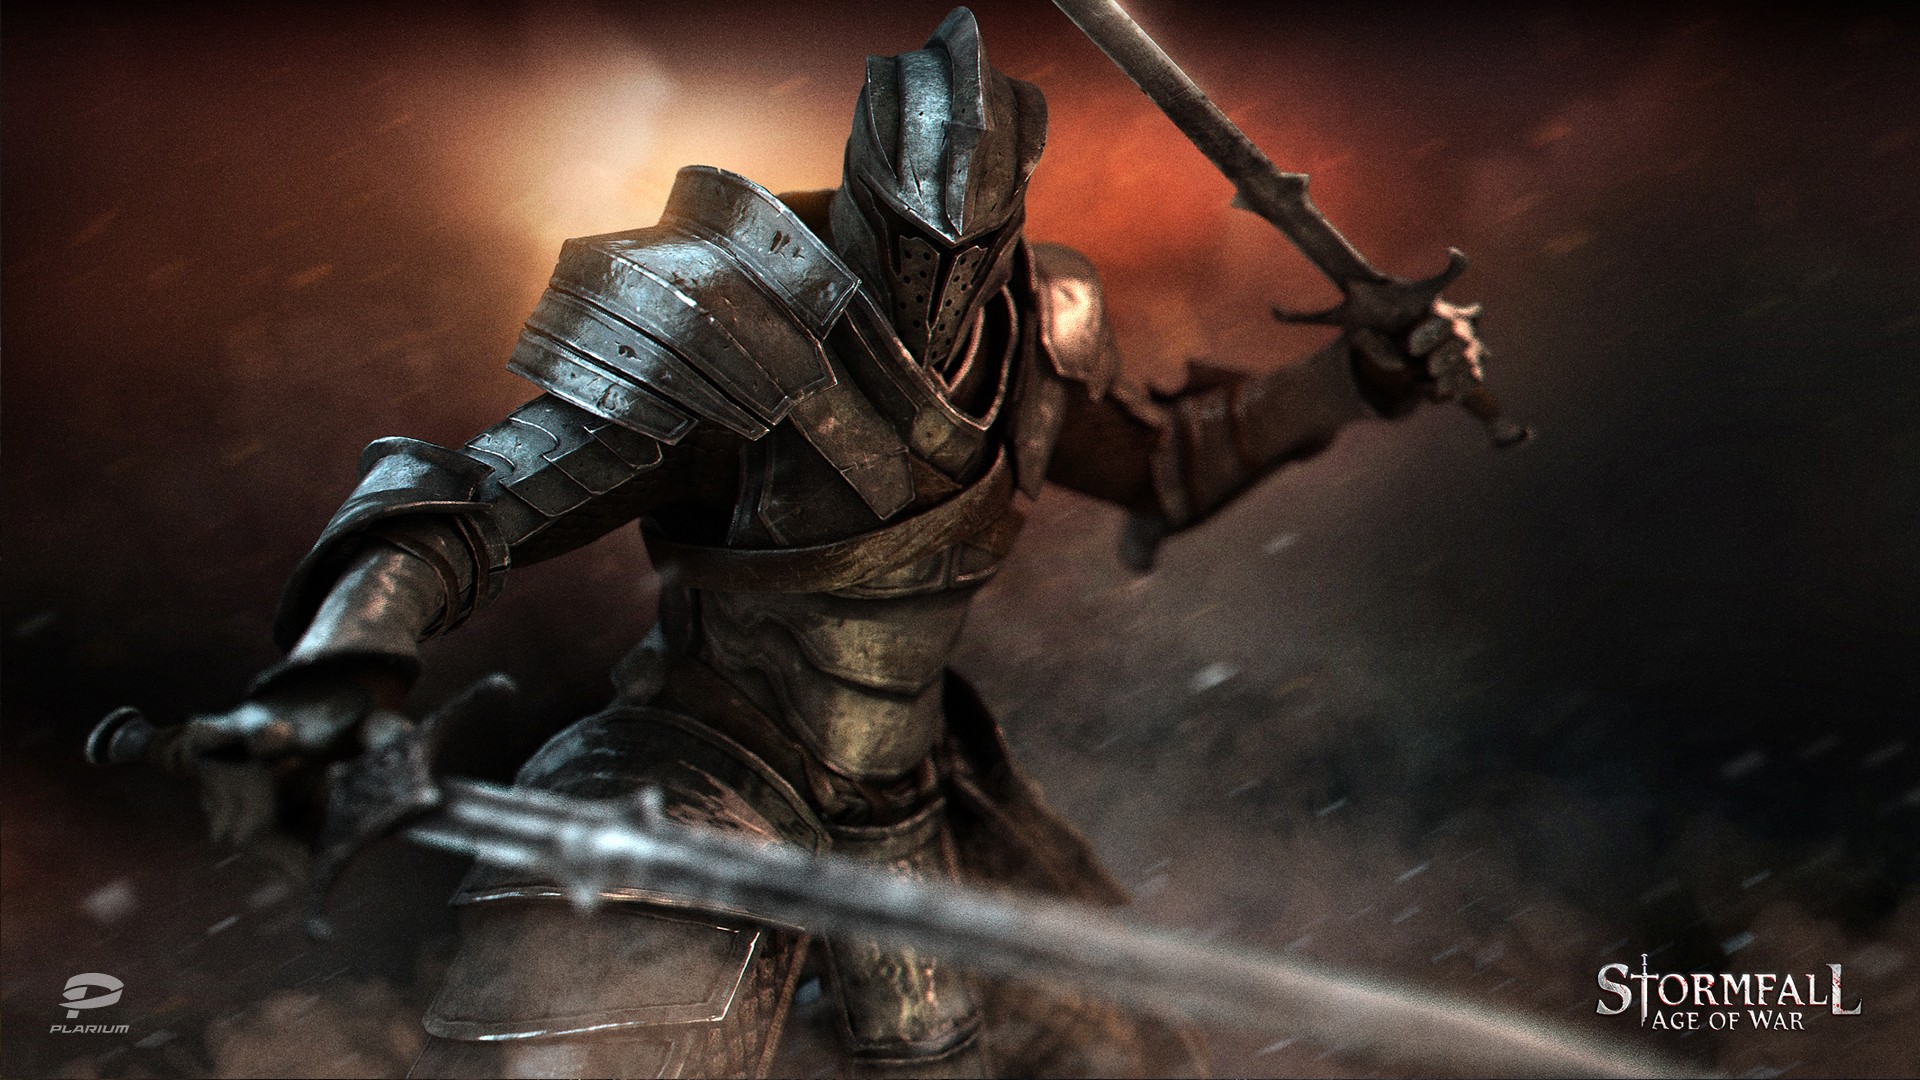 General 1920x1080 video games video game art fantasy art Stormfall PC gaming armor sword